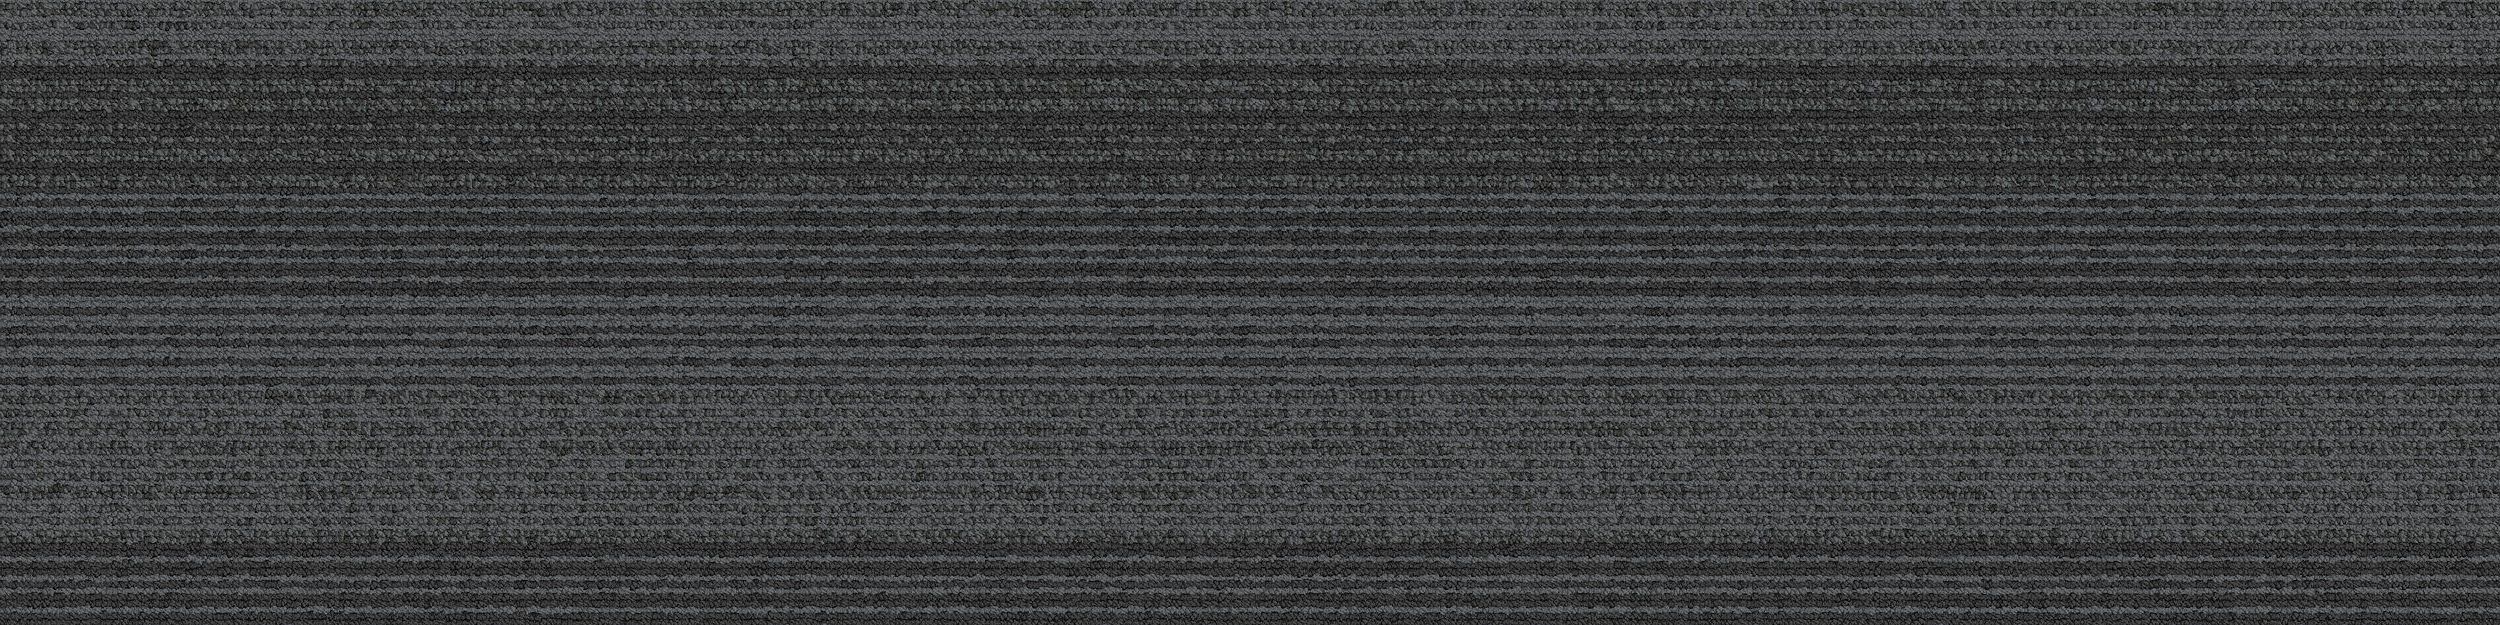 SS217 Carpet Tile In Passageway image number 2